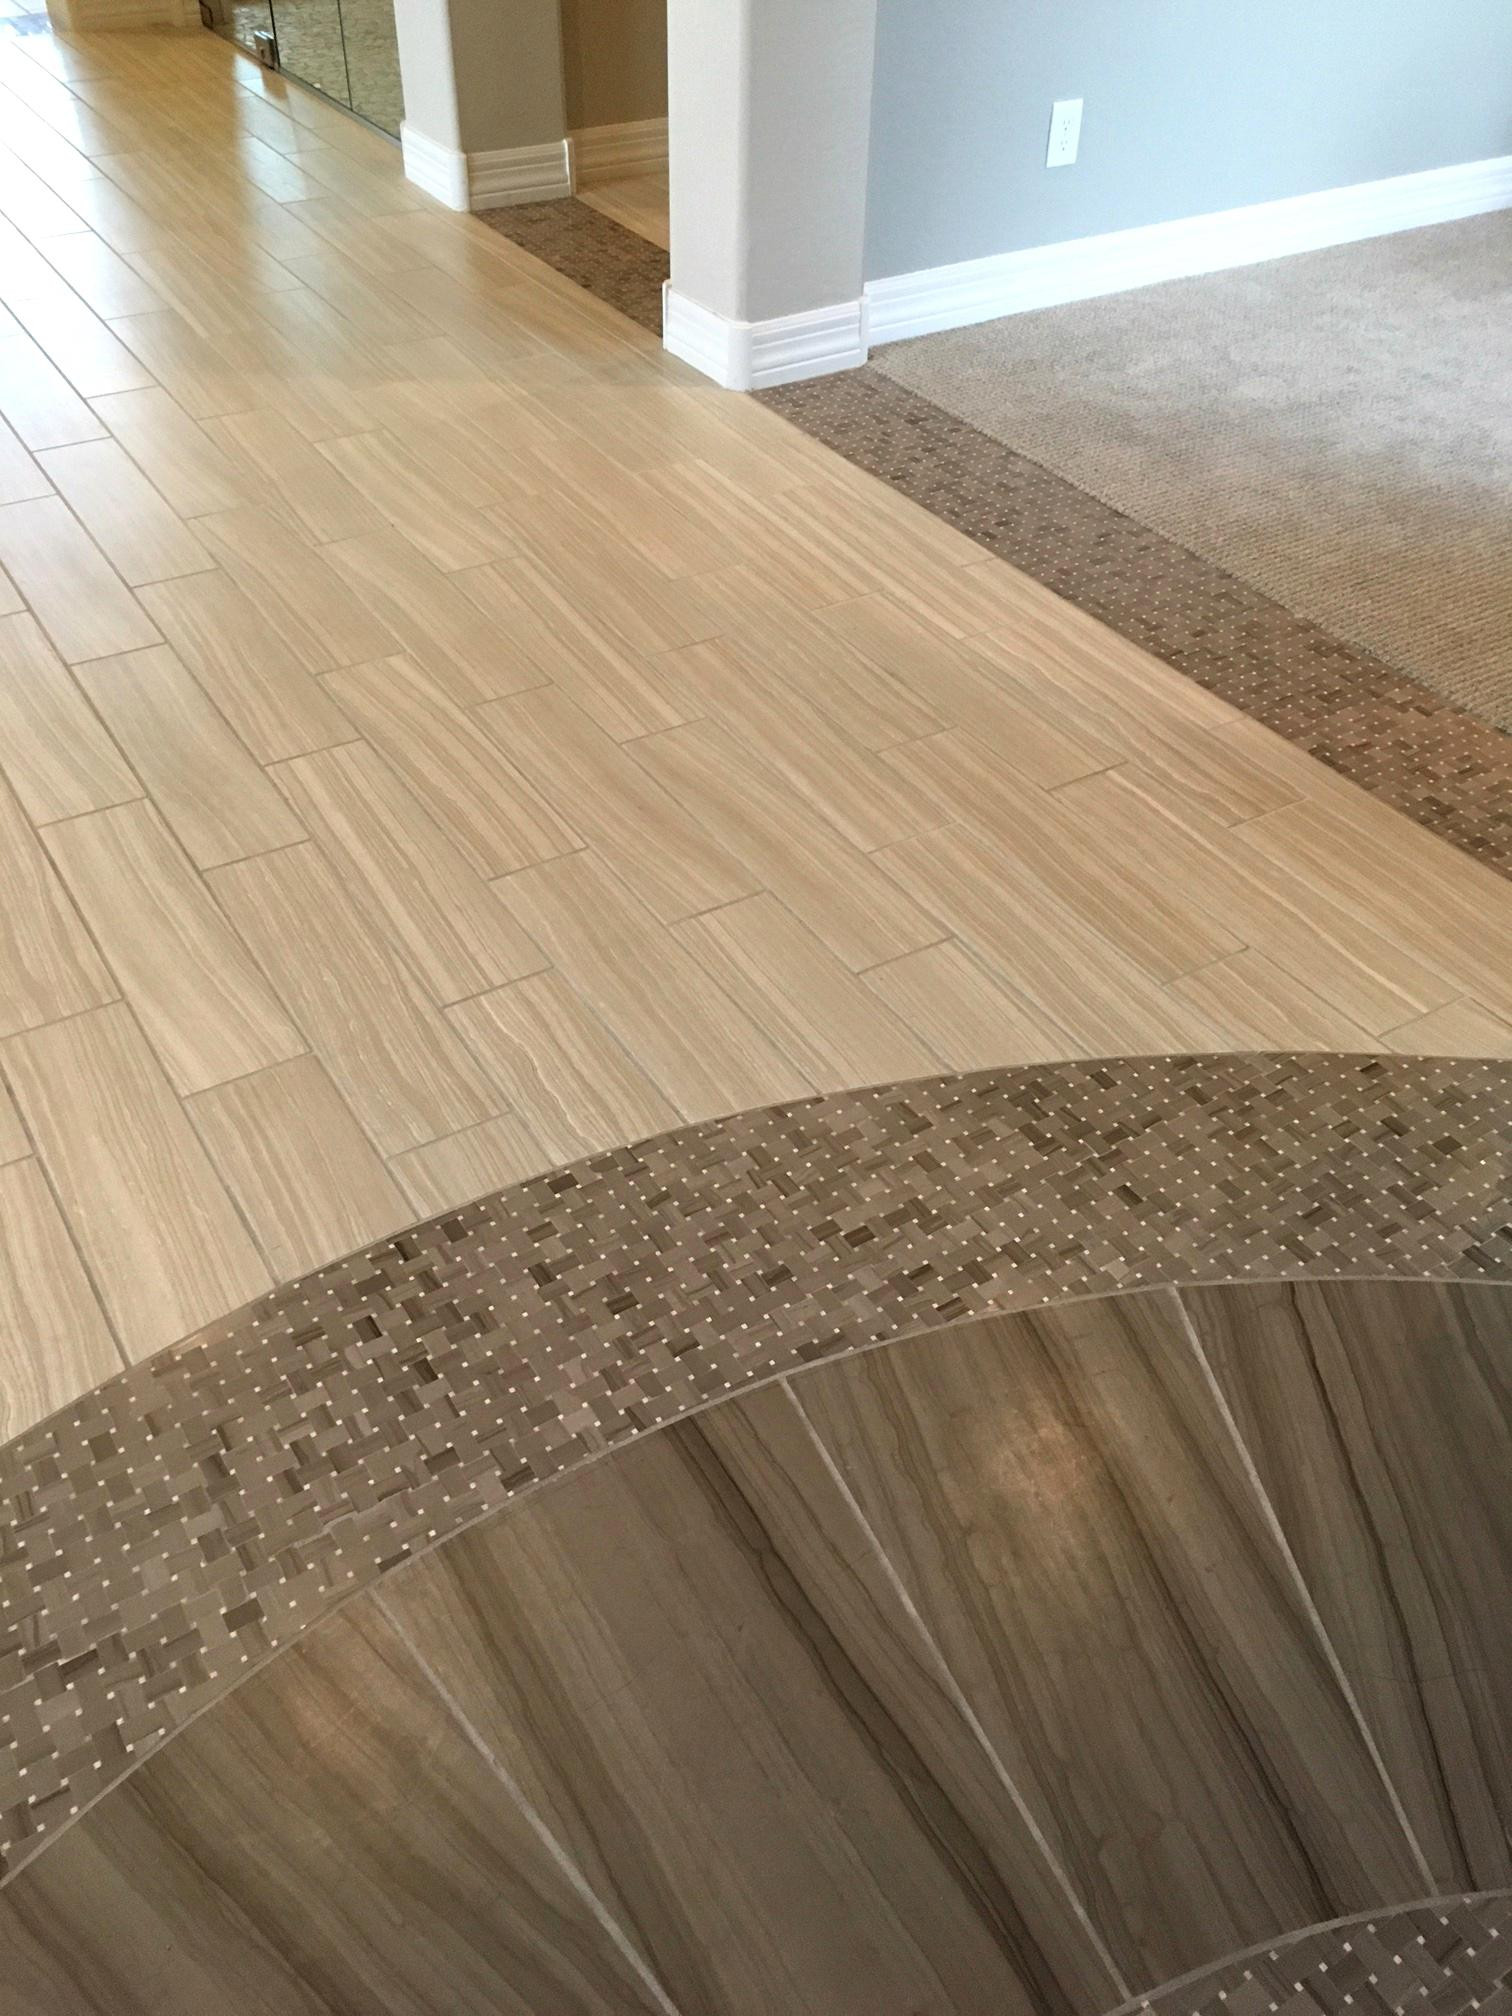 21 Elegant Hardwood Floor With Tile Inlay Unique Flooring Ideas